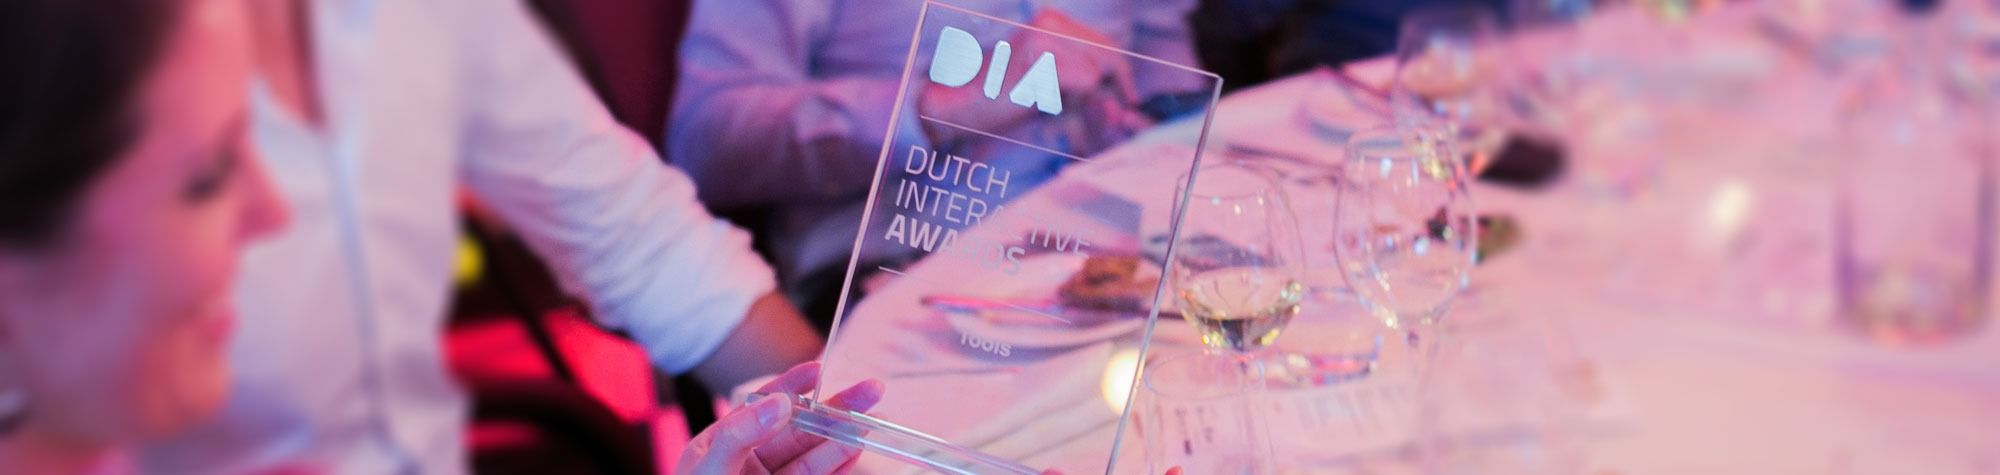 Resono wins Dutch Interactive Award!